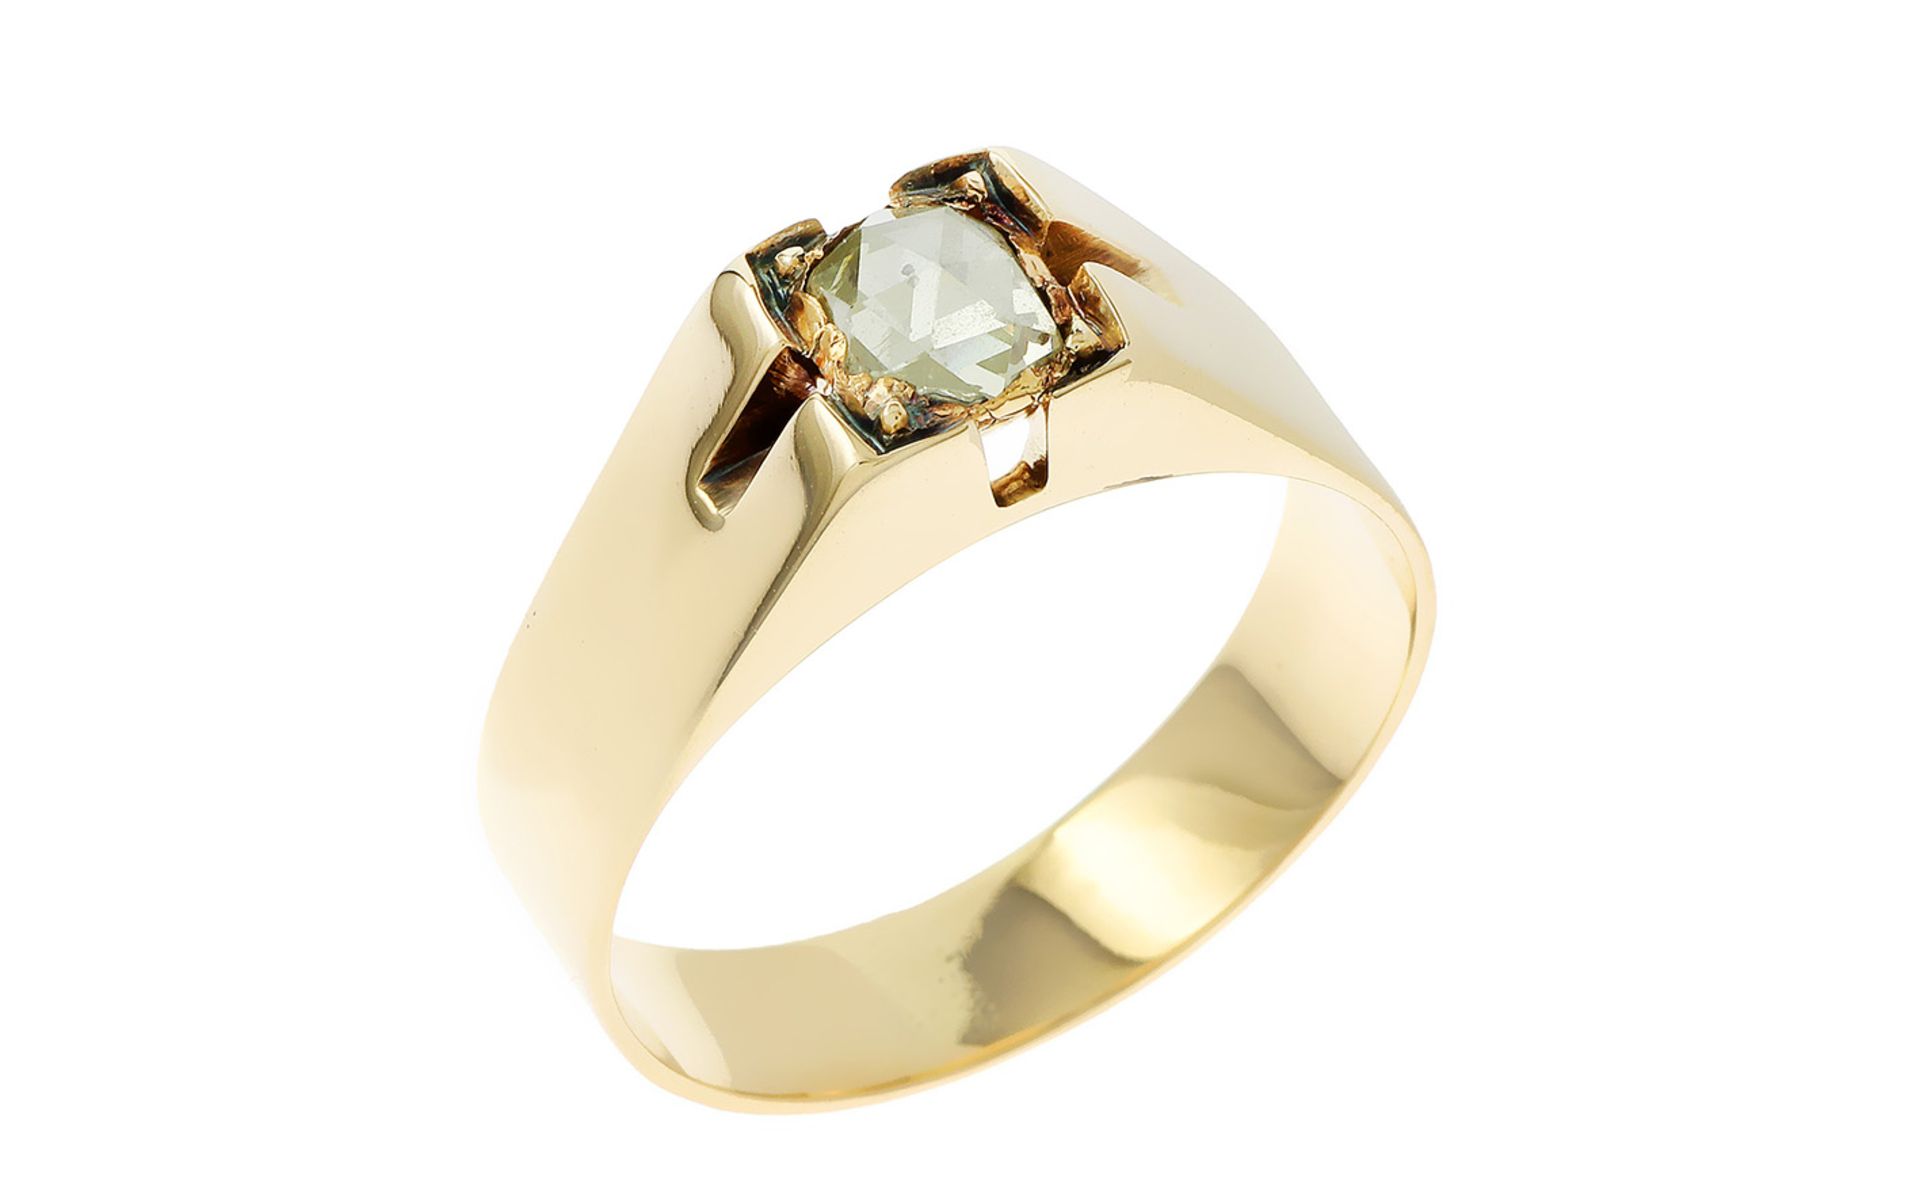 Ring mit Diamant14K mit 0,50 ct. Diamant Rosenschliff, Breite Ringkopf 7,00 mm, Höhe Ringkopf 5,00